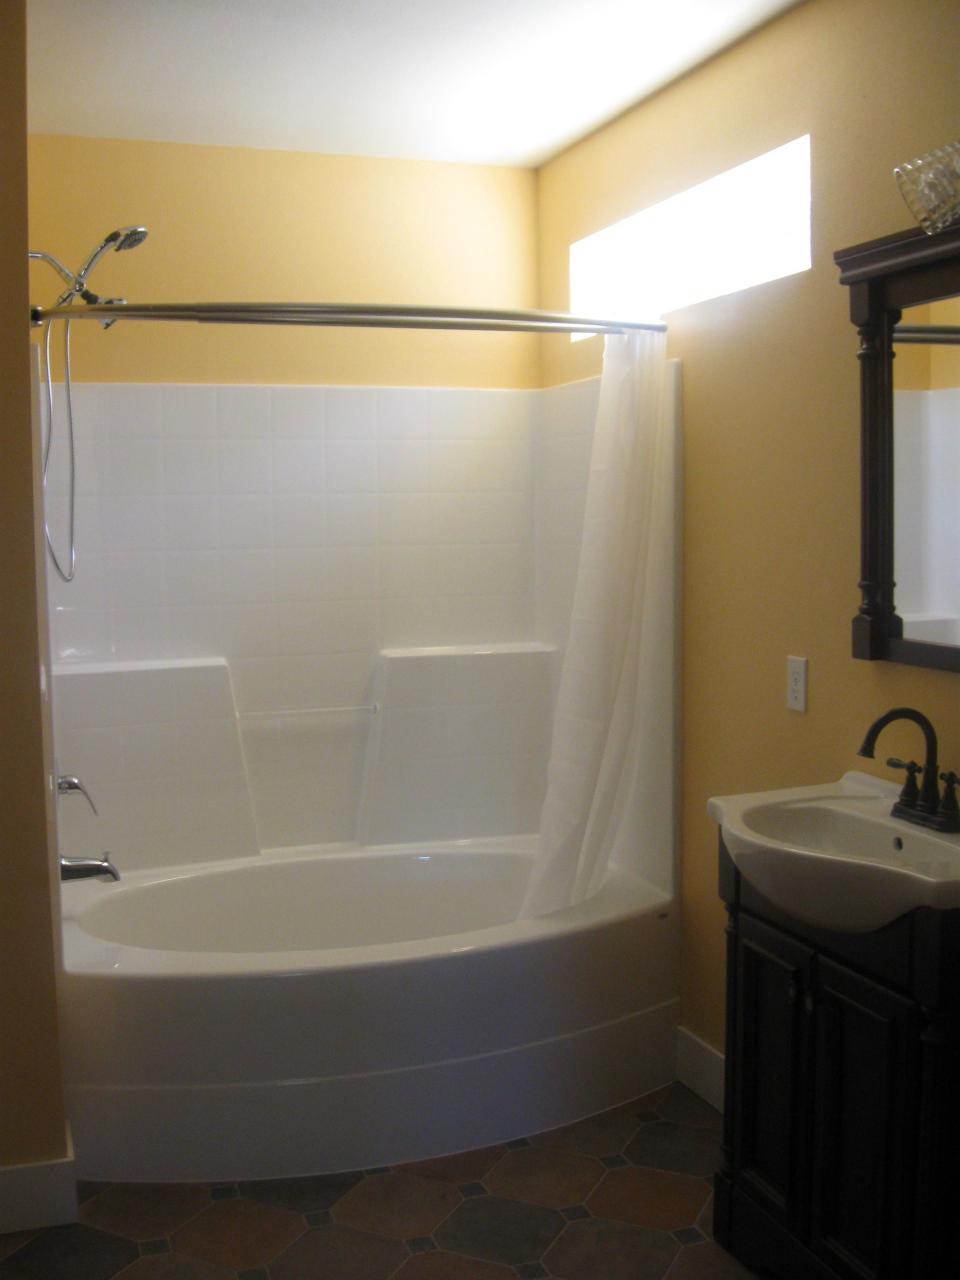 Oval White Fiberglass Corner Bathtub With Shower Curtain of Impressive